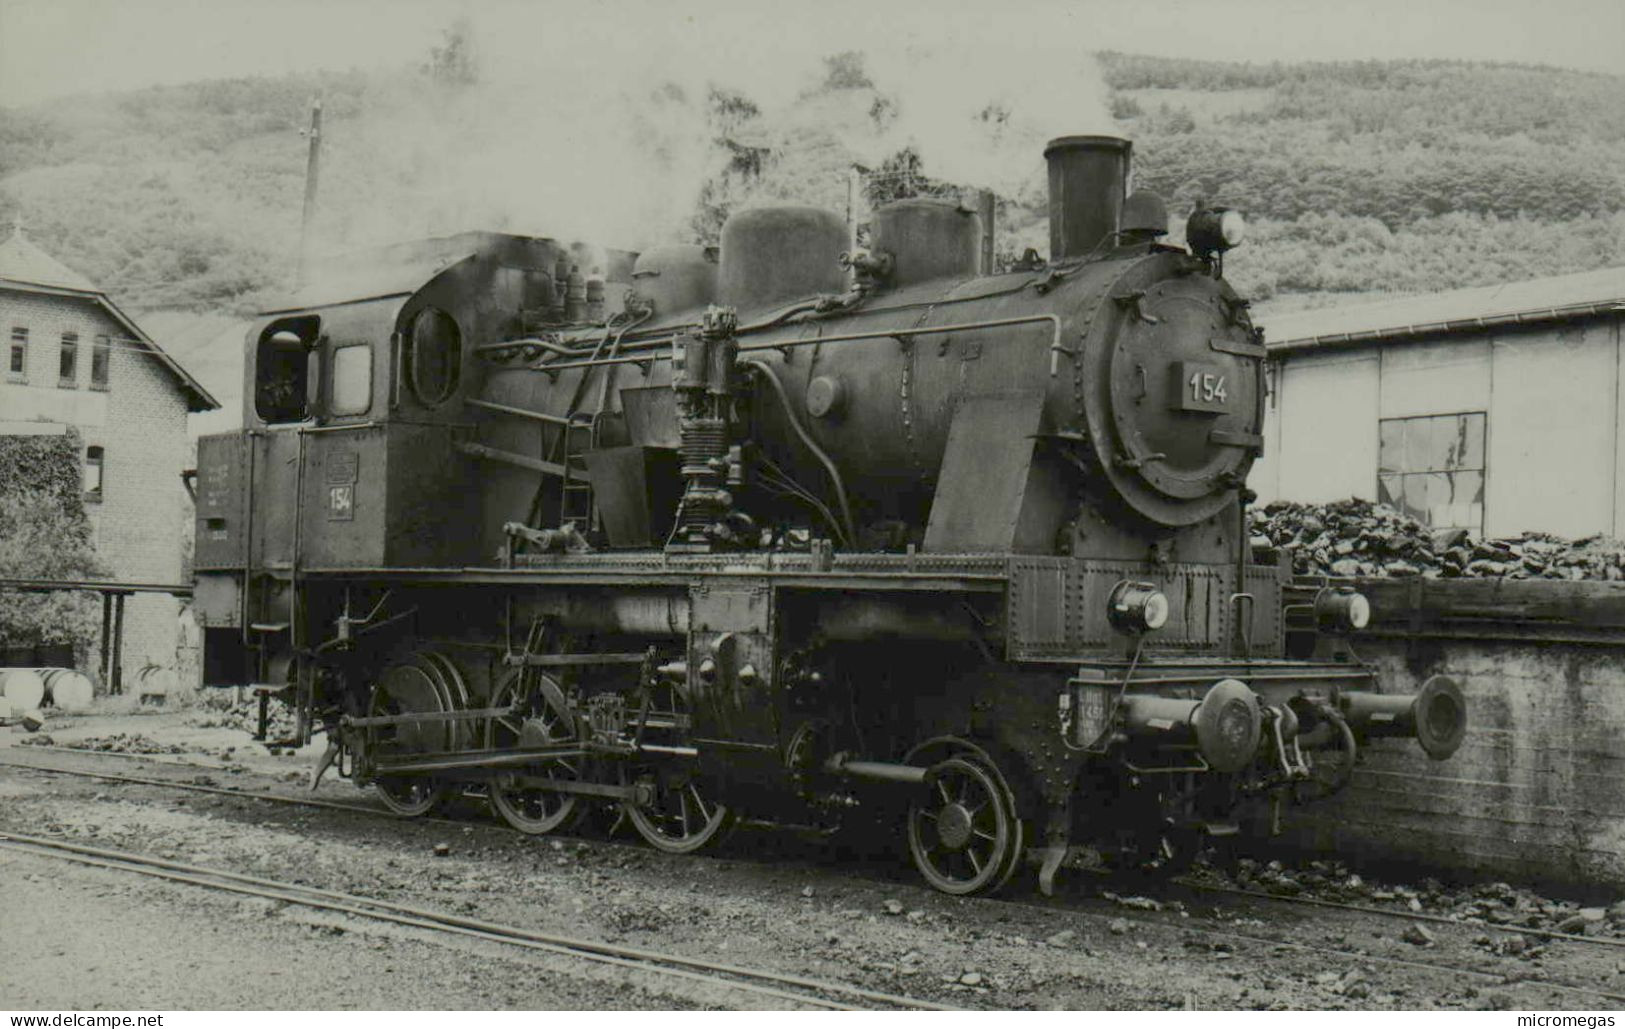 Locomotive 154 - Cliché Jacques H. Renaud - Trenes